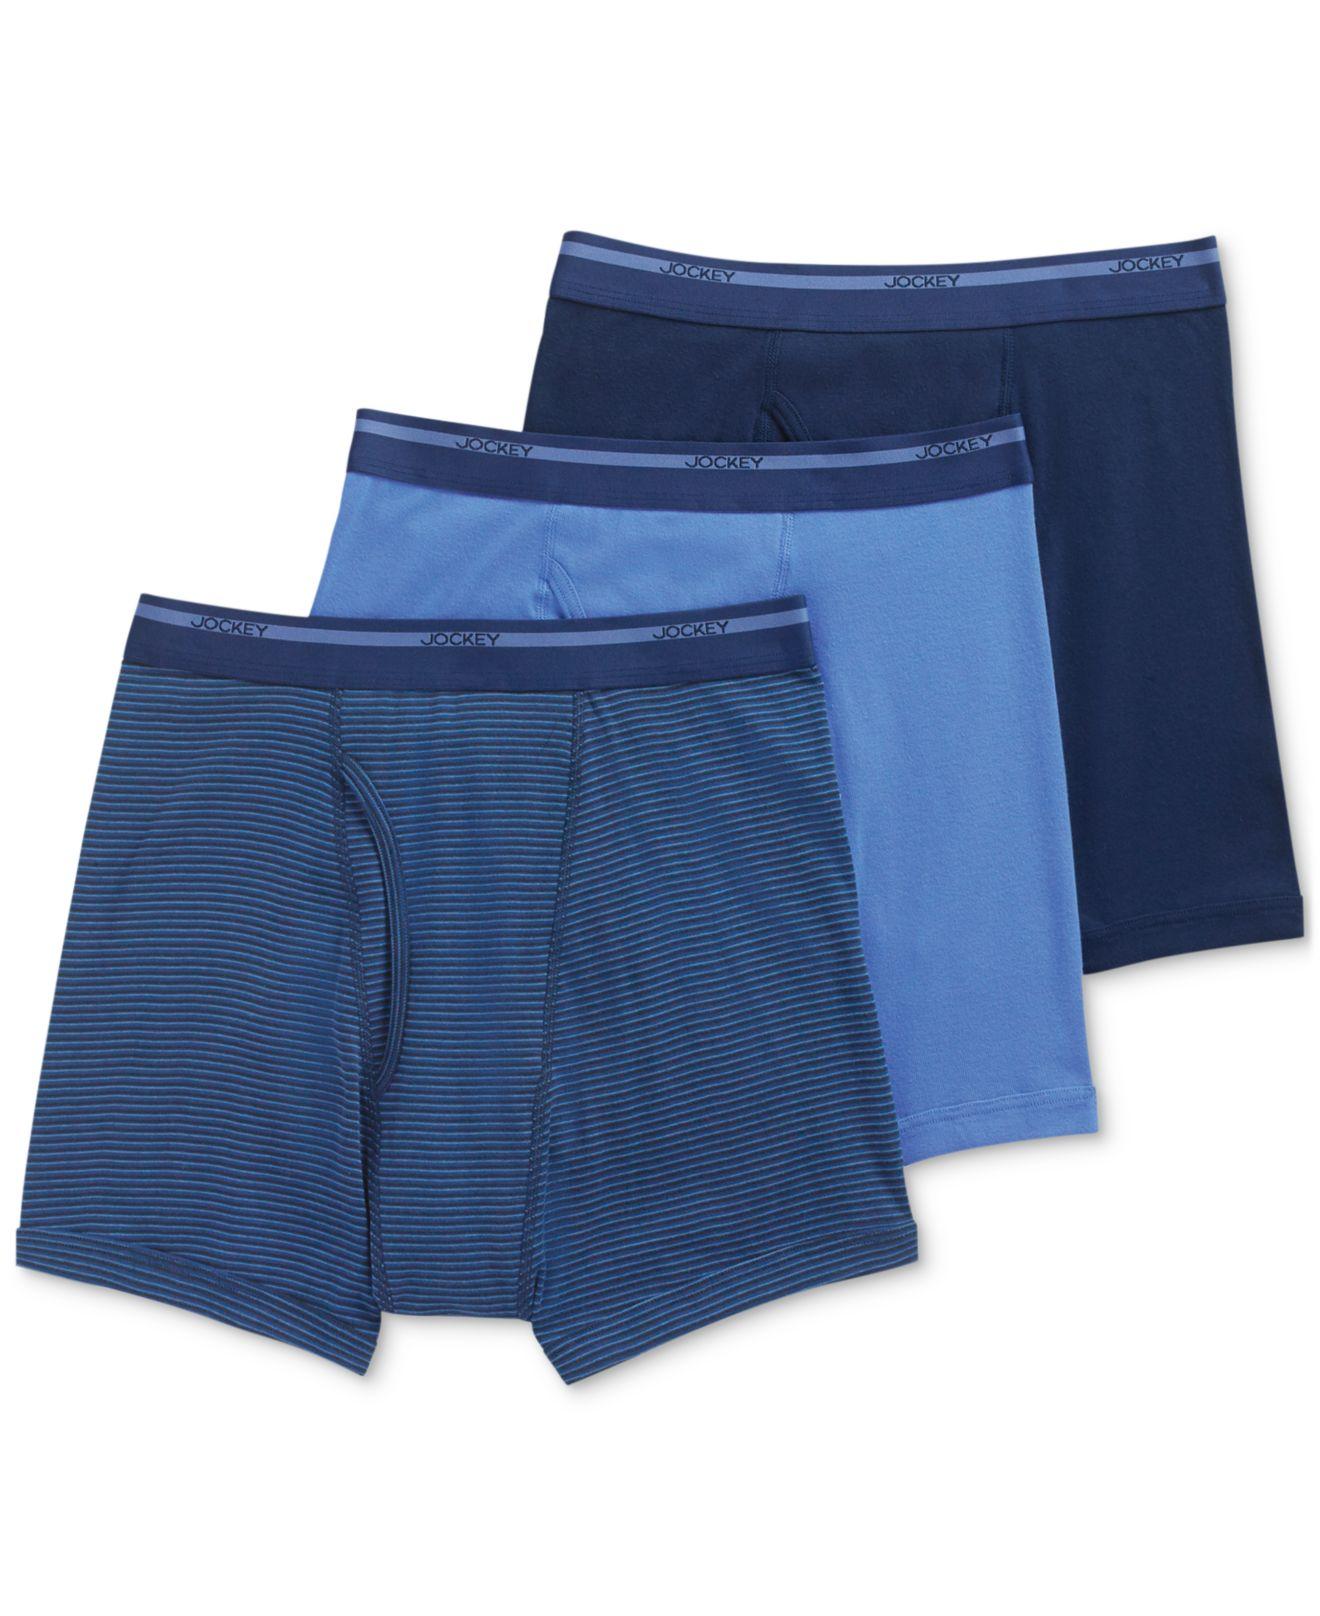 Lyst - Jockey Men's Classic 3 Pack Cotton Boxer Briefs in Blue for Men